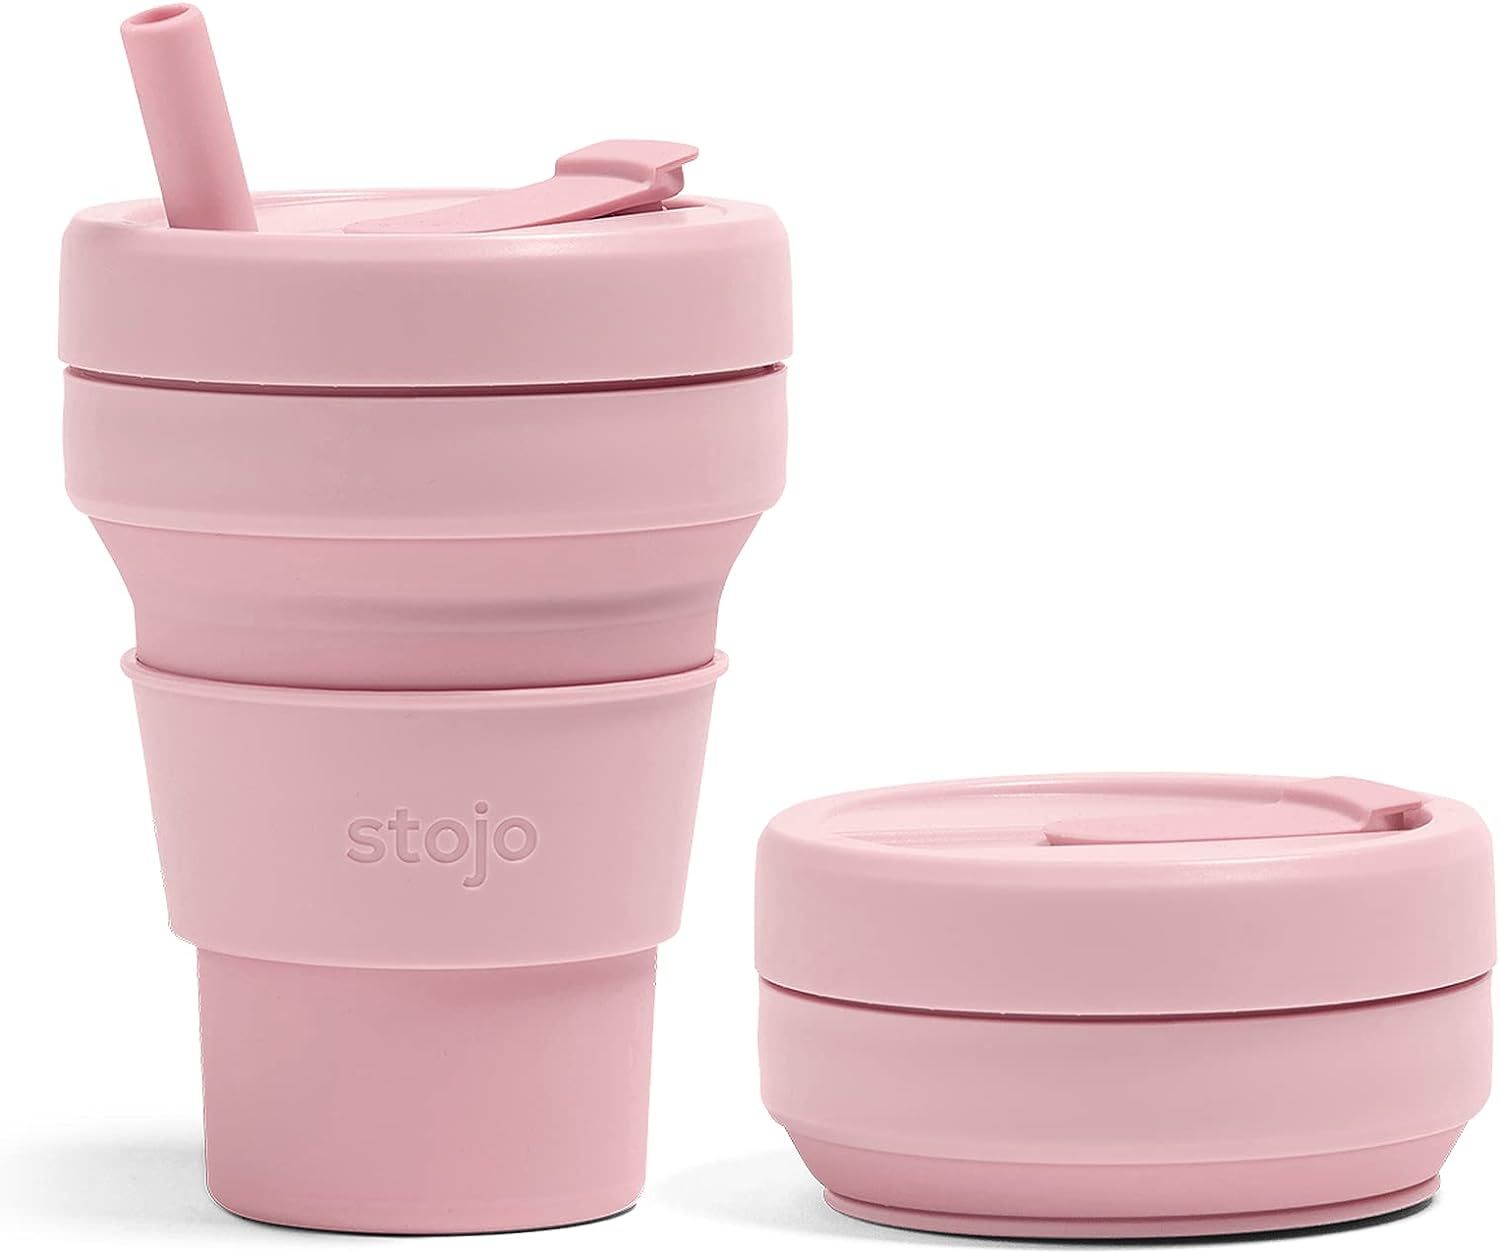 STOJO Collapsible Travel Cup - Carnation Pink, 8oz / 250ml - Leak-Proof Reusable To-Go Pocket Siz... | Amazon (US)